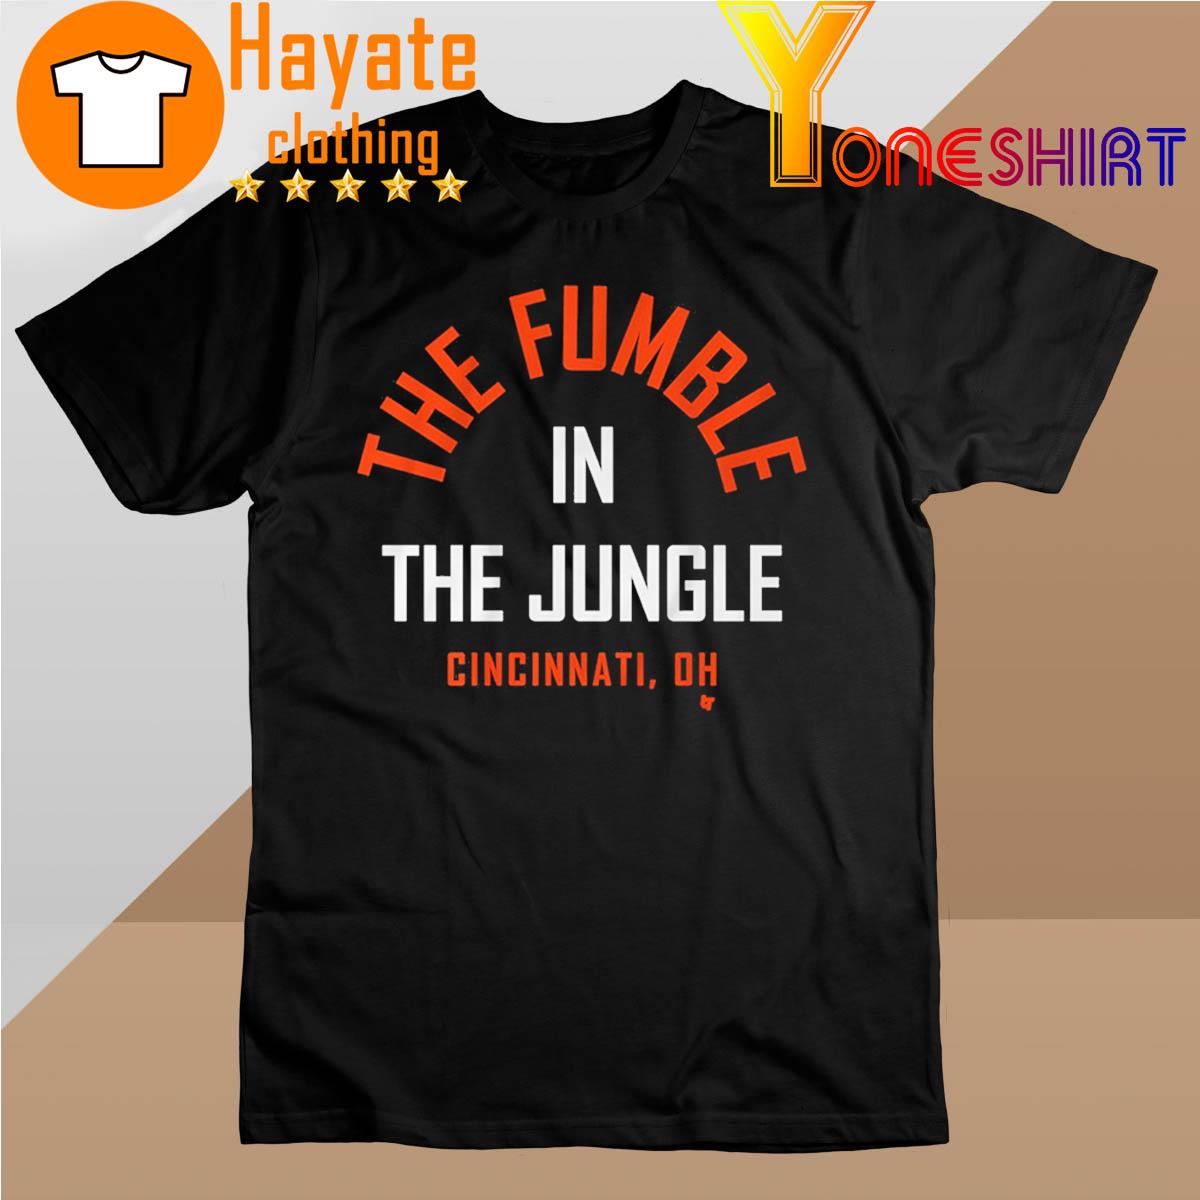 The Fumble in the Jungle Cincinnati OH shirt